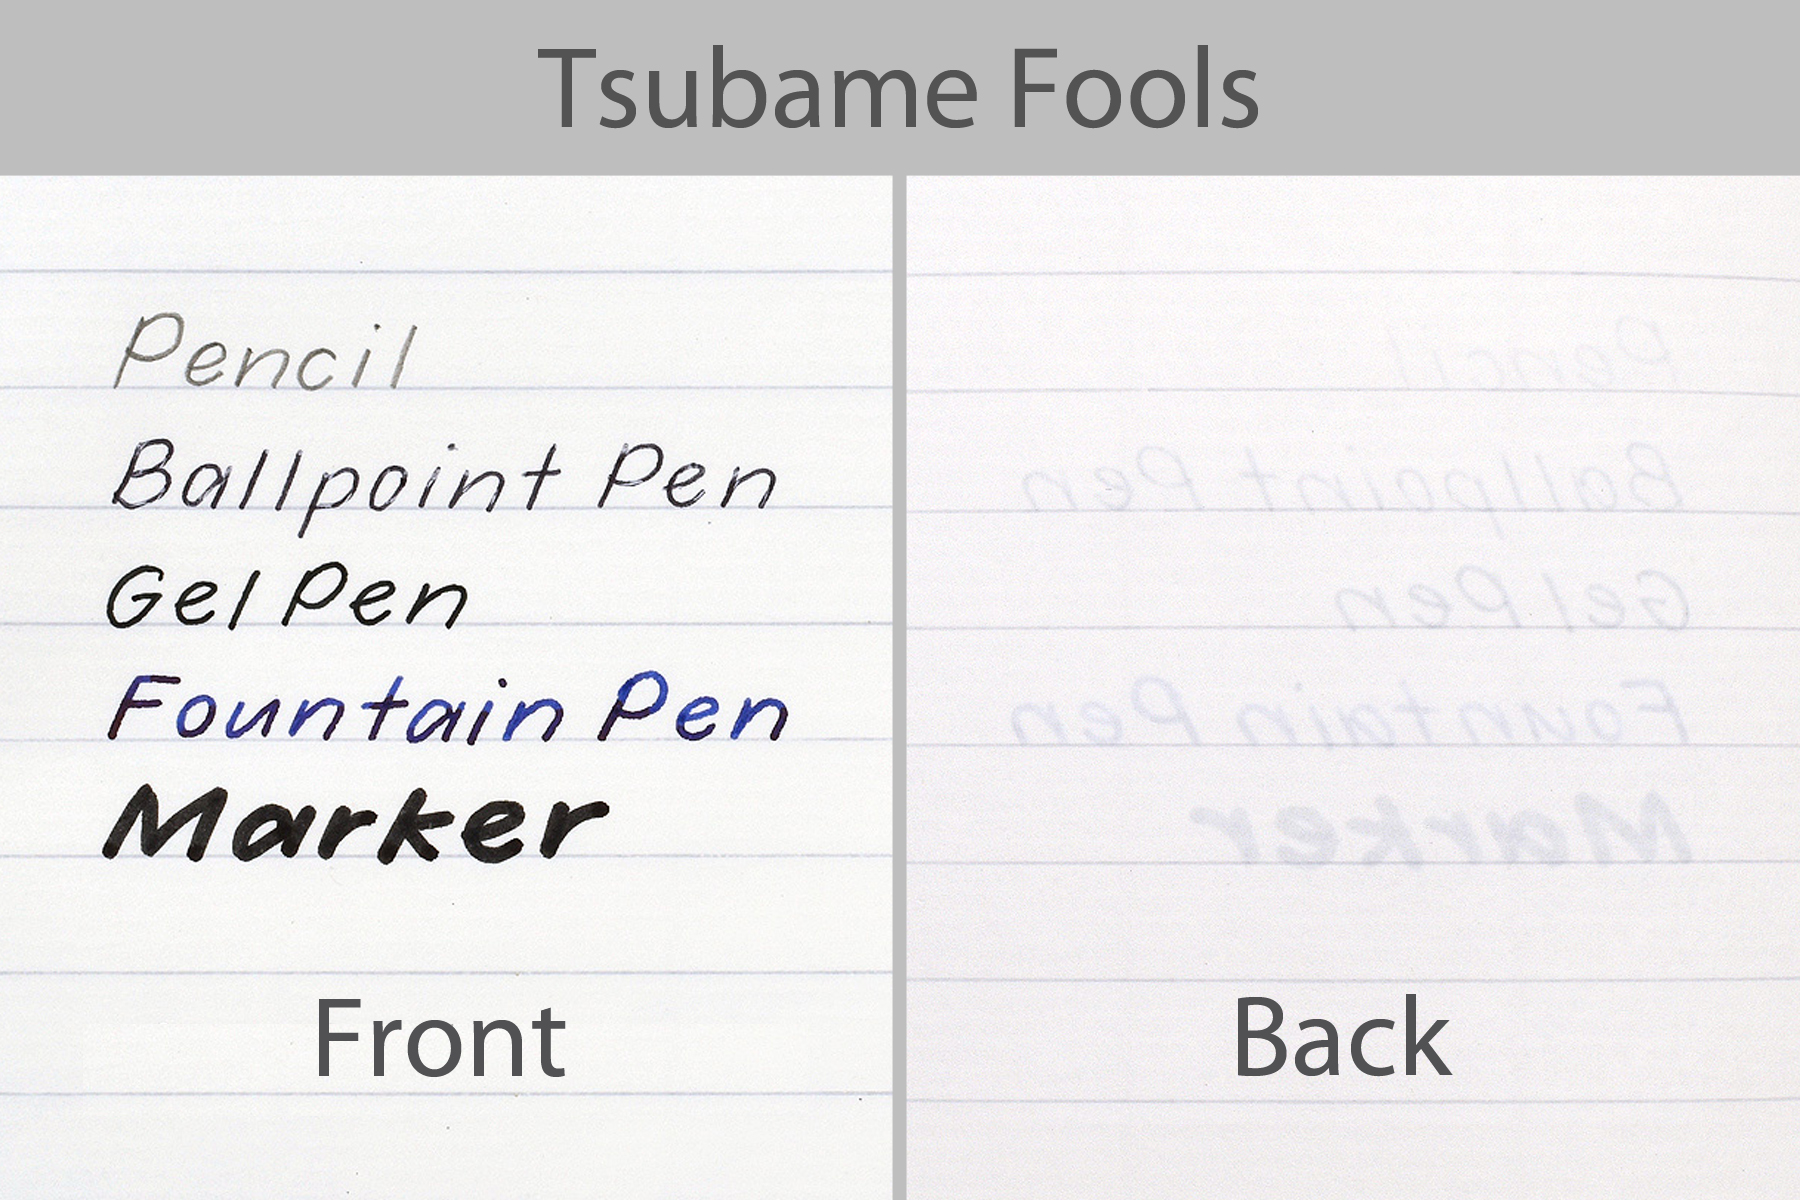 Tsubame Fools writing sample.